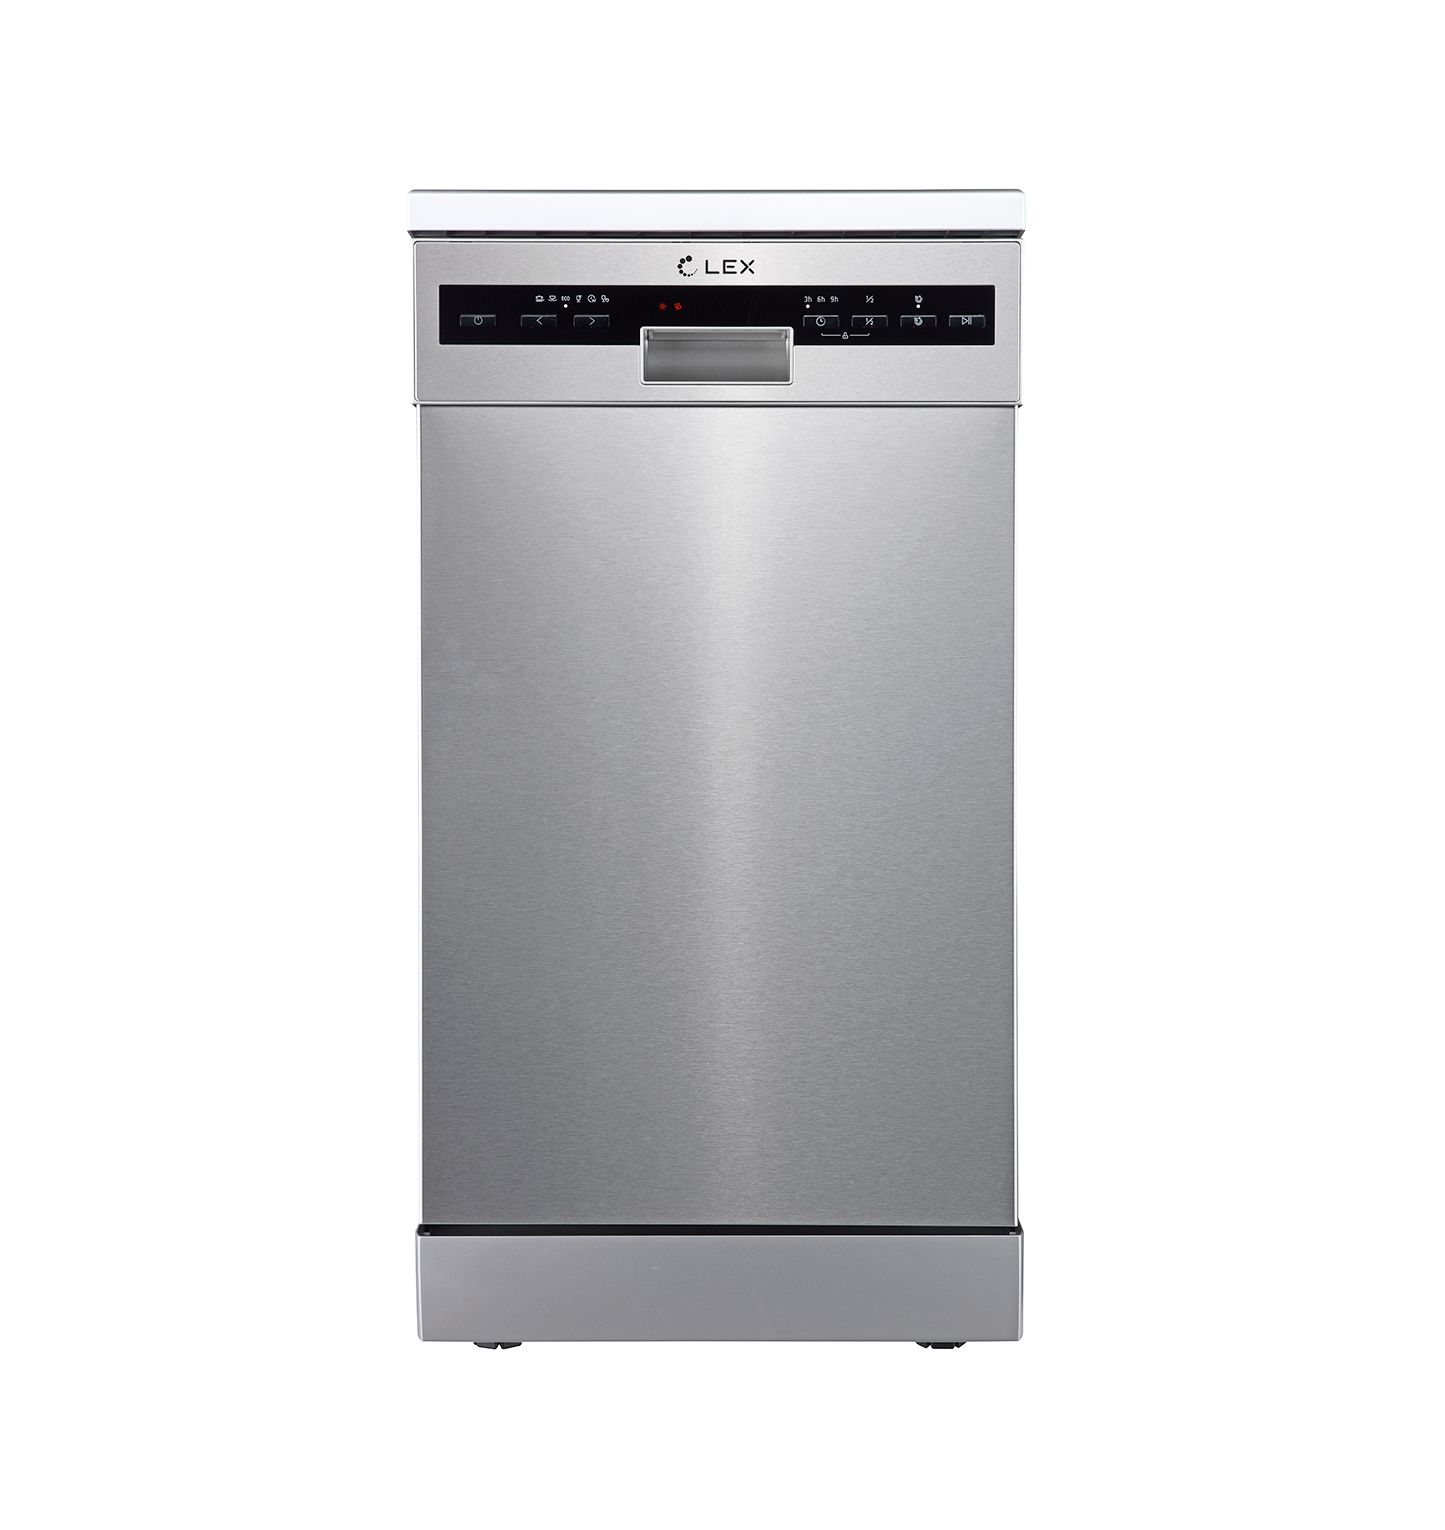 Посудомоечная машина LEX DW 4562 серебристый посудомоечная машина pioneer dwm01 белая